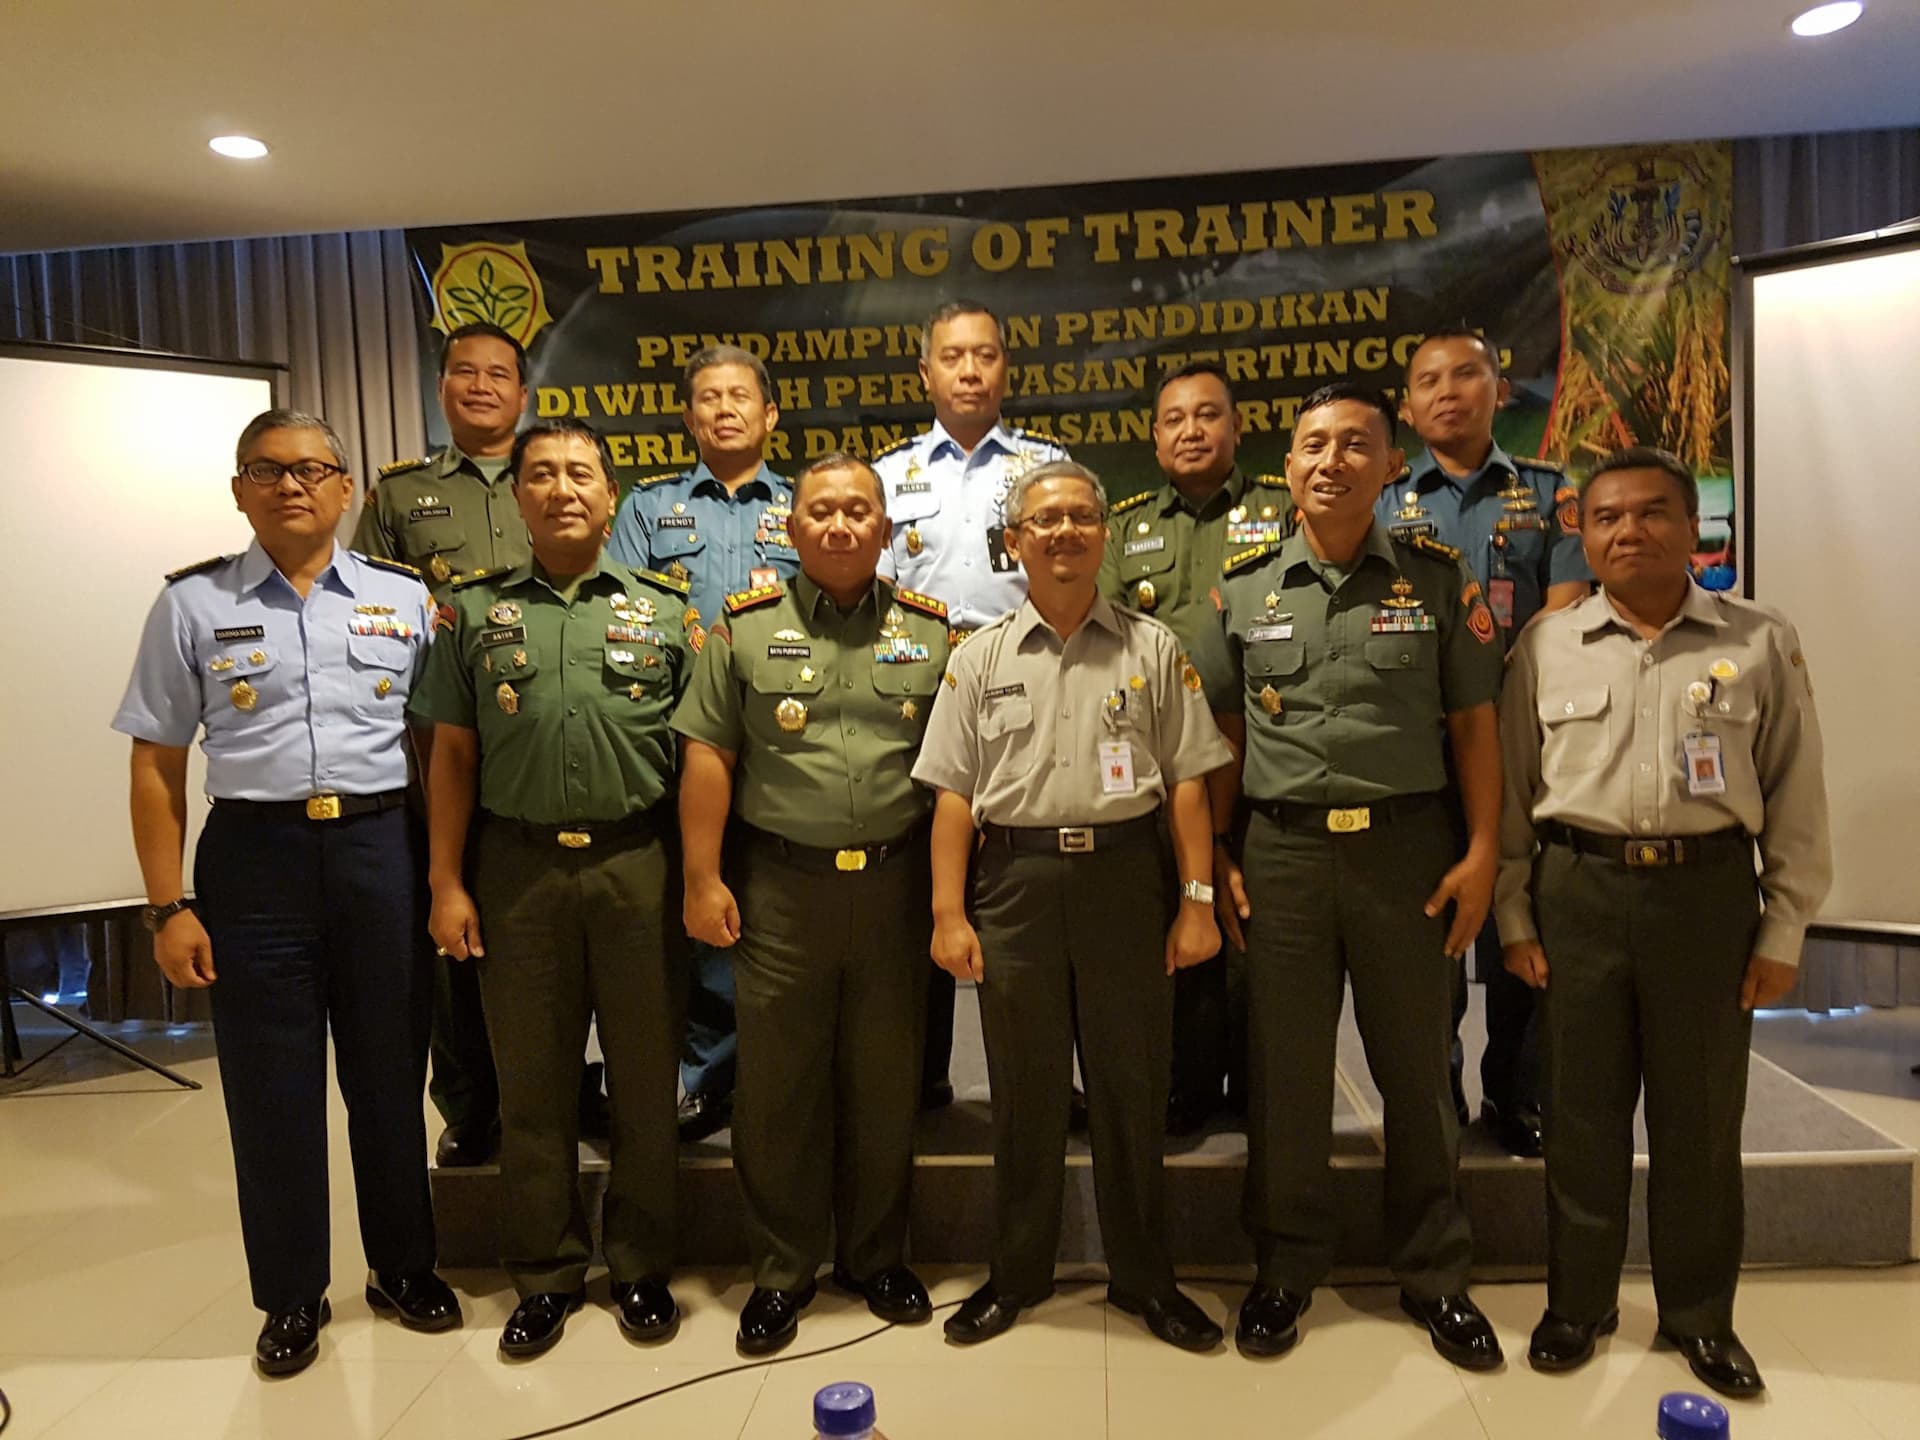 Training of Trainer Pendampingan Pendidikan :   Membekali Taruna  Akademi TNI dengan Pengetahuan  Ketahanan Pangan